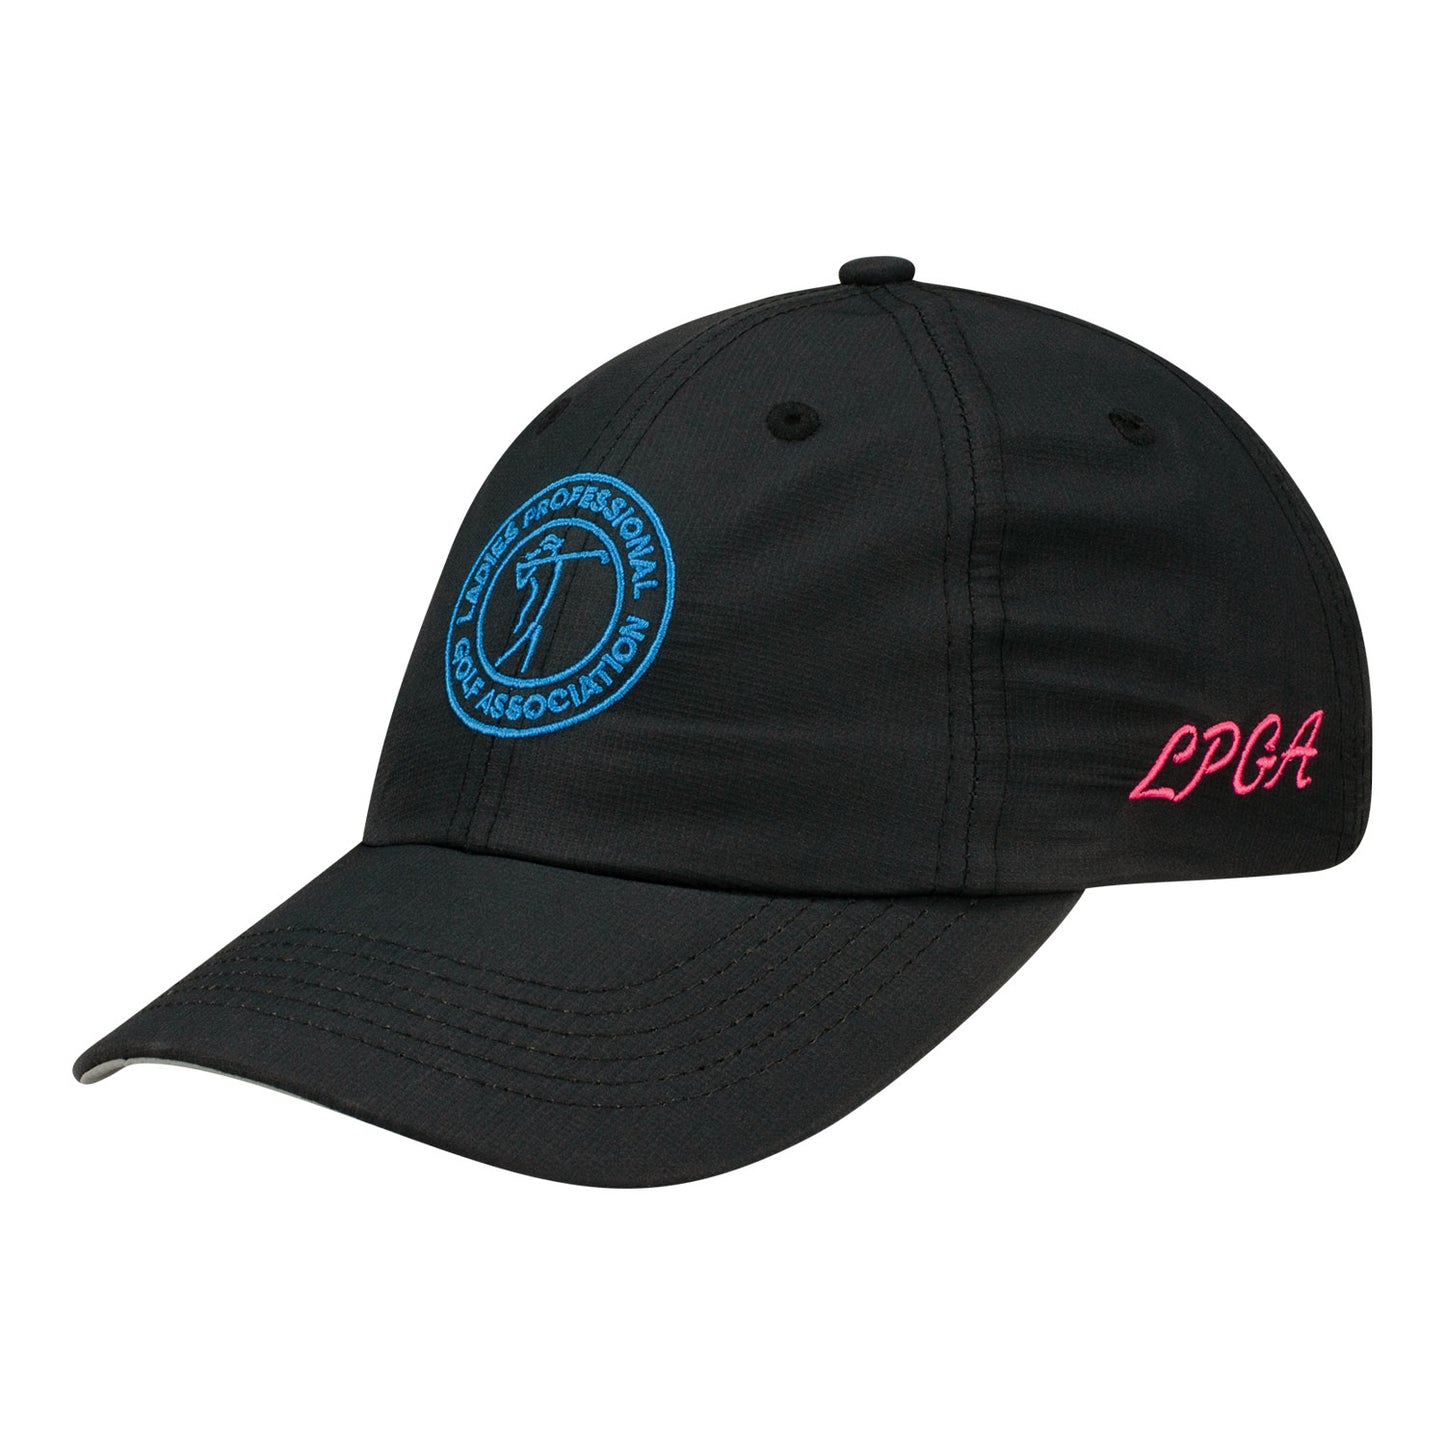 Imperial LPGA Women's Hat in Black - Angled Left Side View